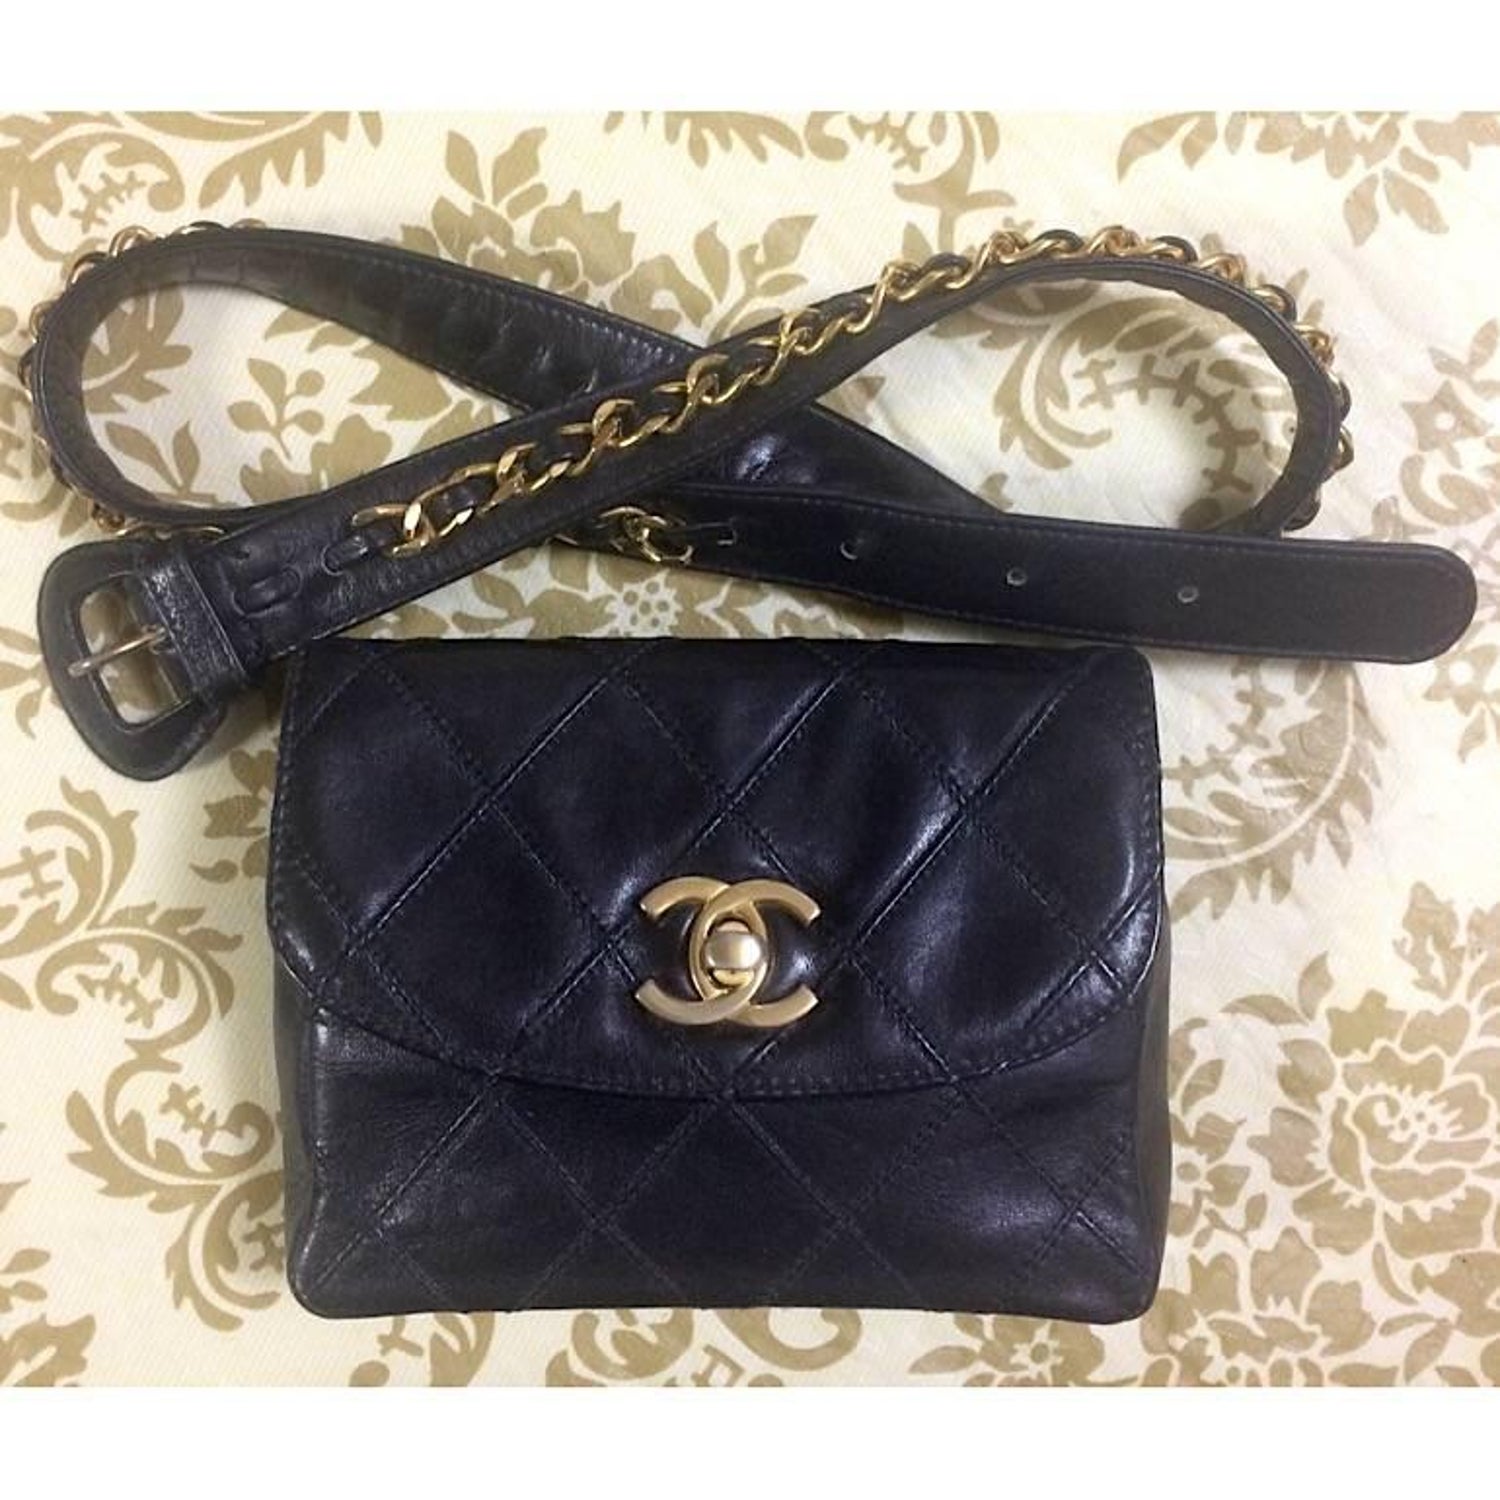 CHANEL NEW Black Lambskin Leather Card Holder Mini Jewel Hook